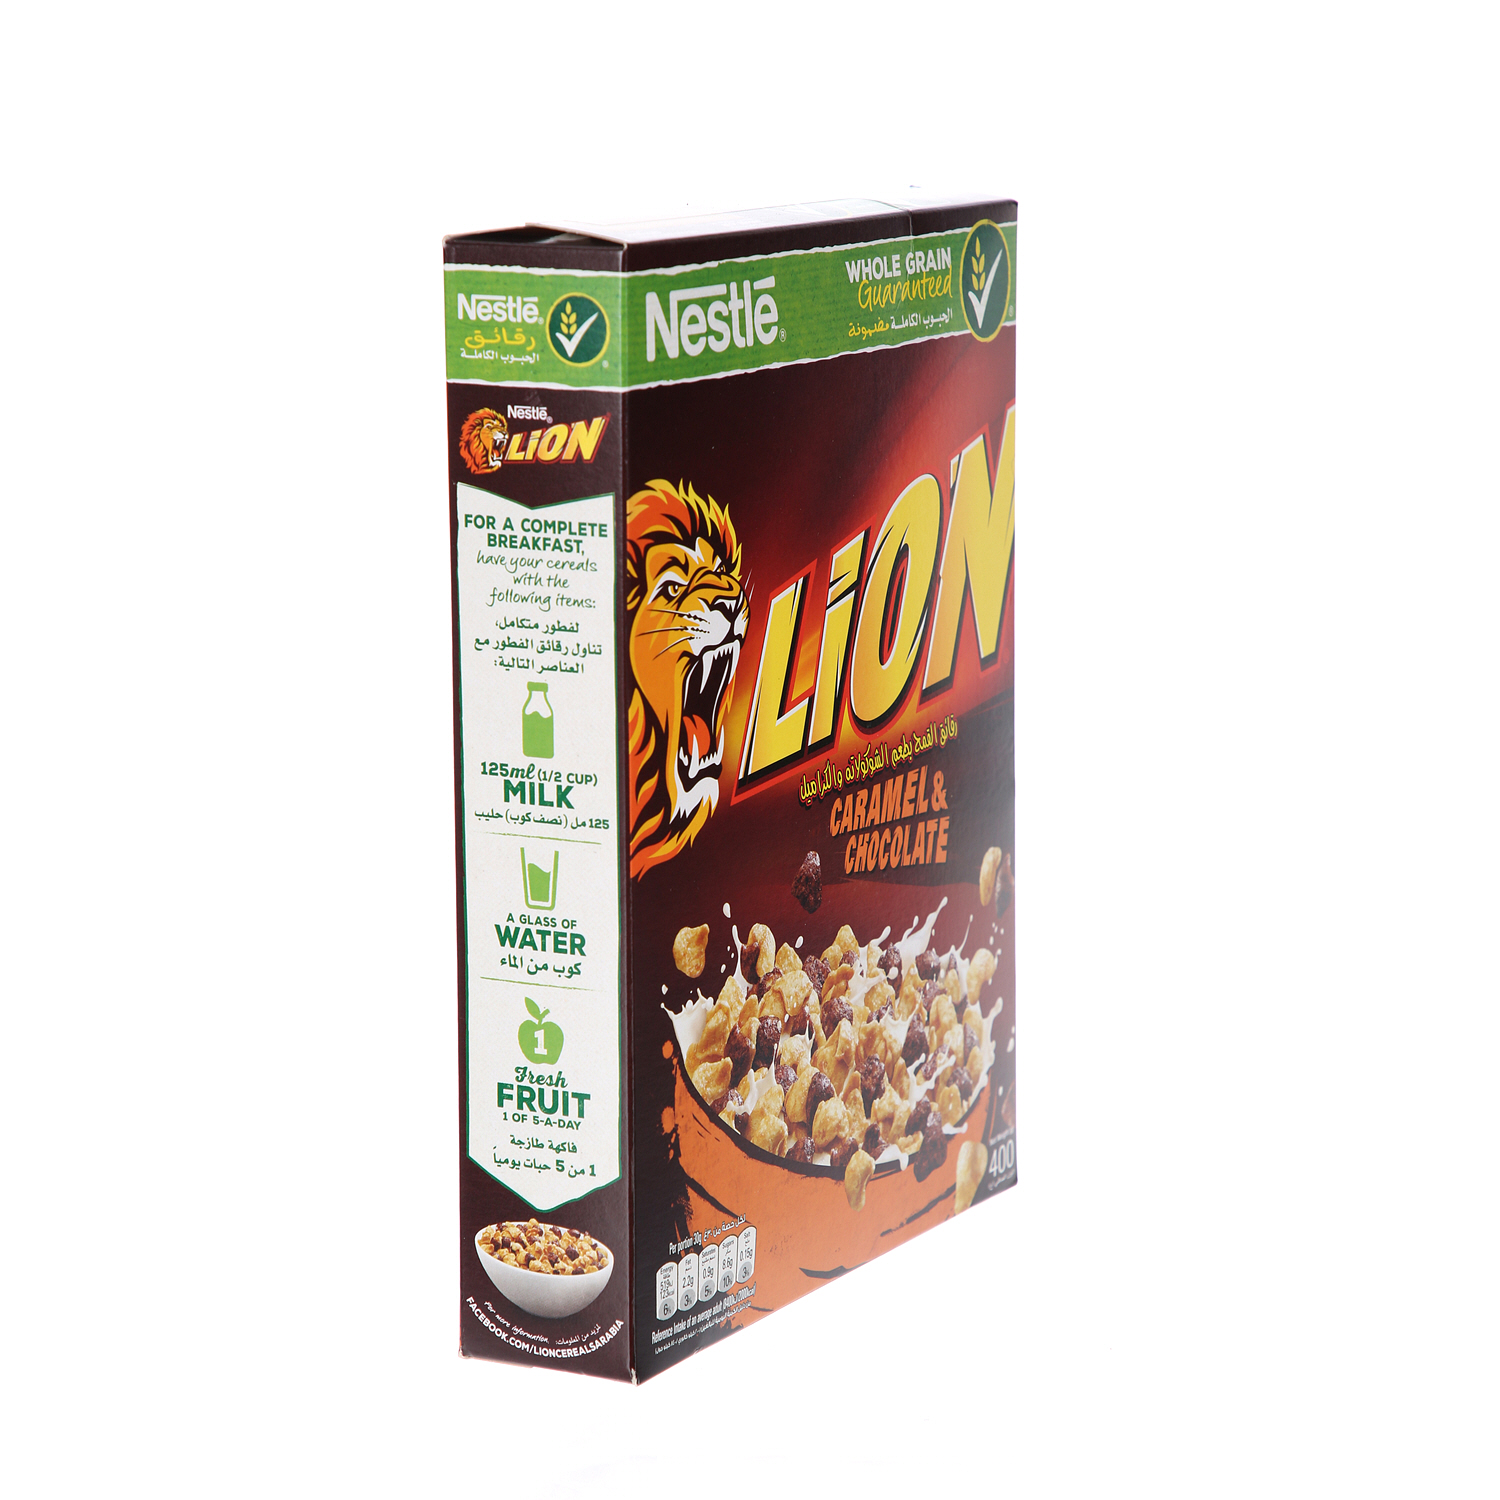 Nestlé Lion Corn Flakes Caramel & Chocolate 400gm